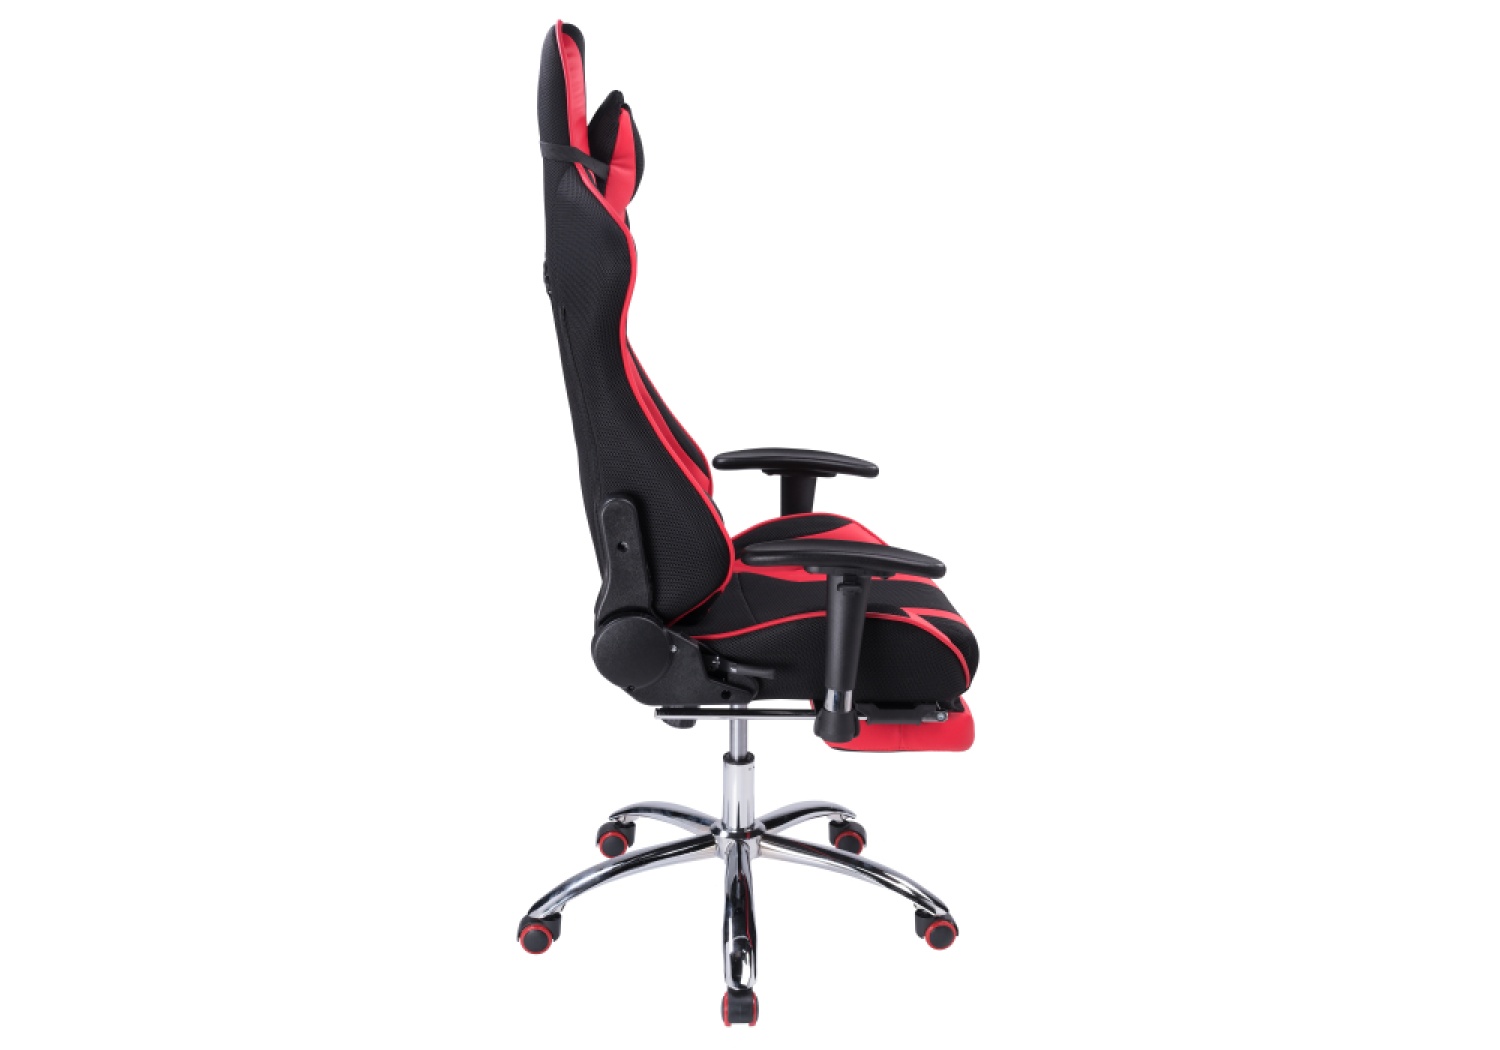 Офисное кресло Kano 1 red / black